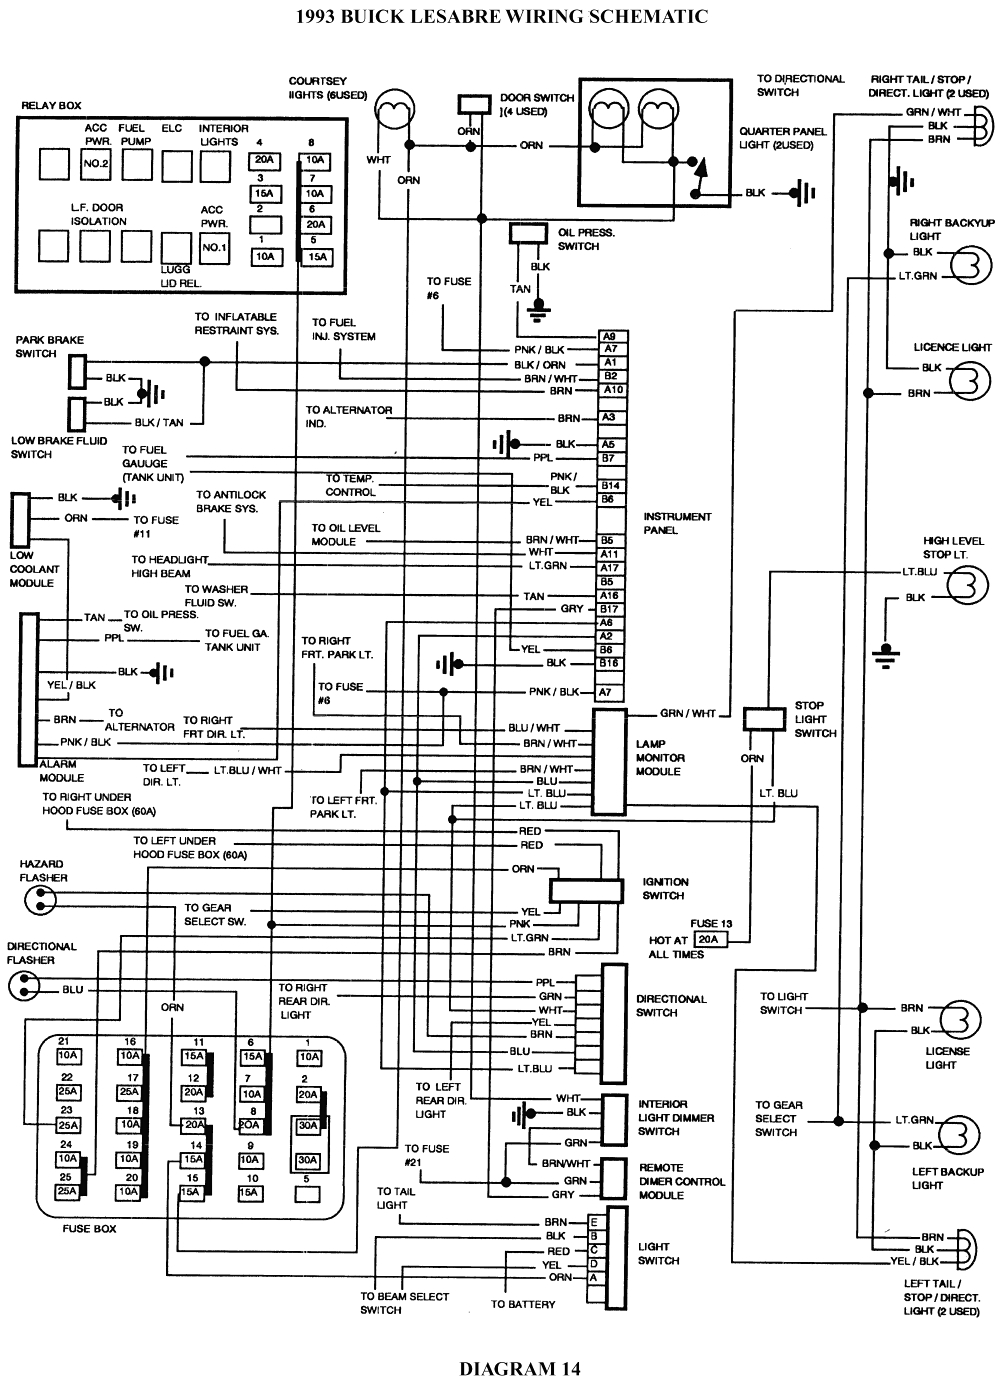 wiring diagram 2003 buick lesabre interior free download wiring buick rendezvous door lock switch wiring diagram